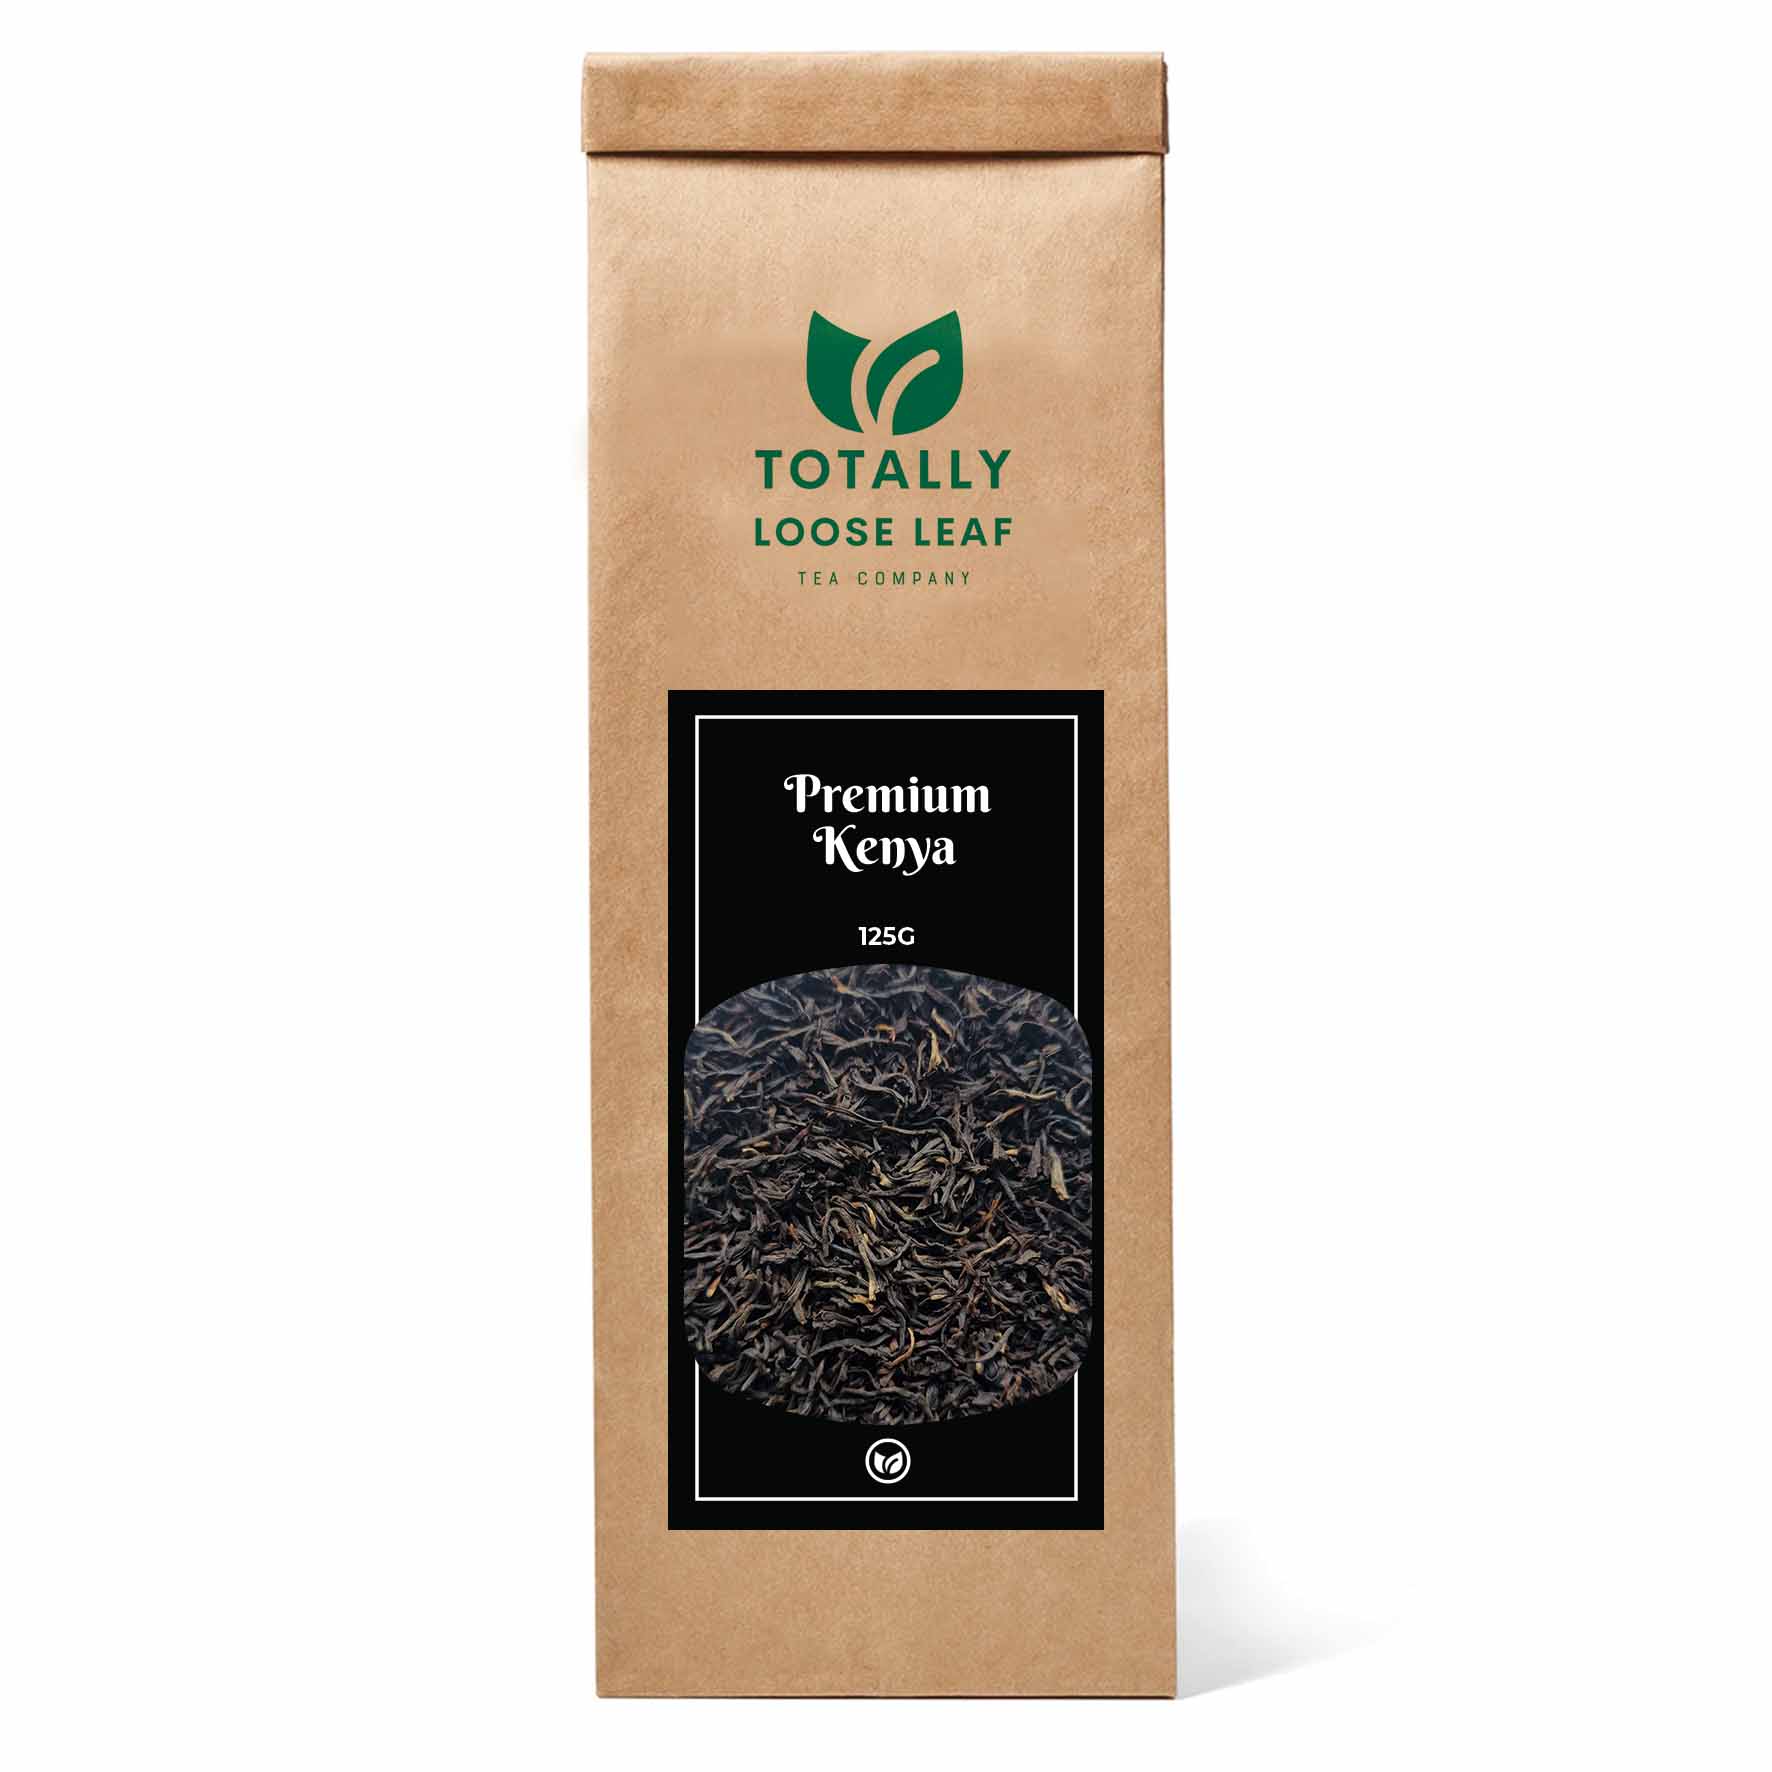 Premium Kenya Black Estate Loose Leaf Tea - one pouch